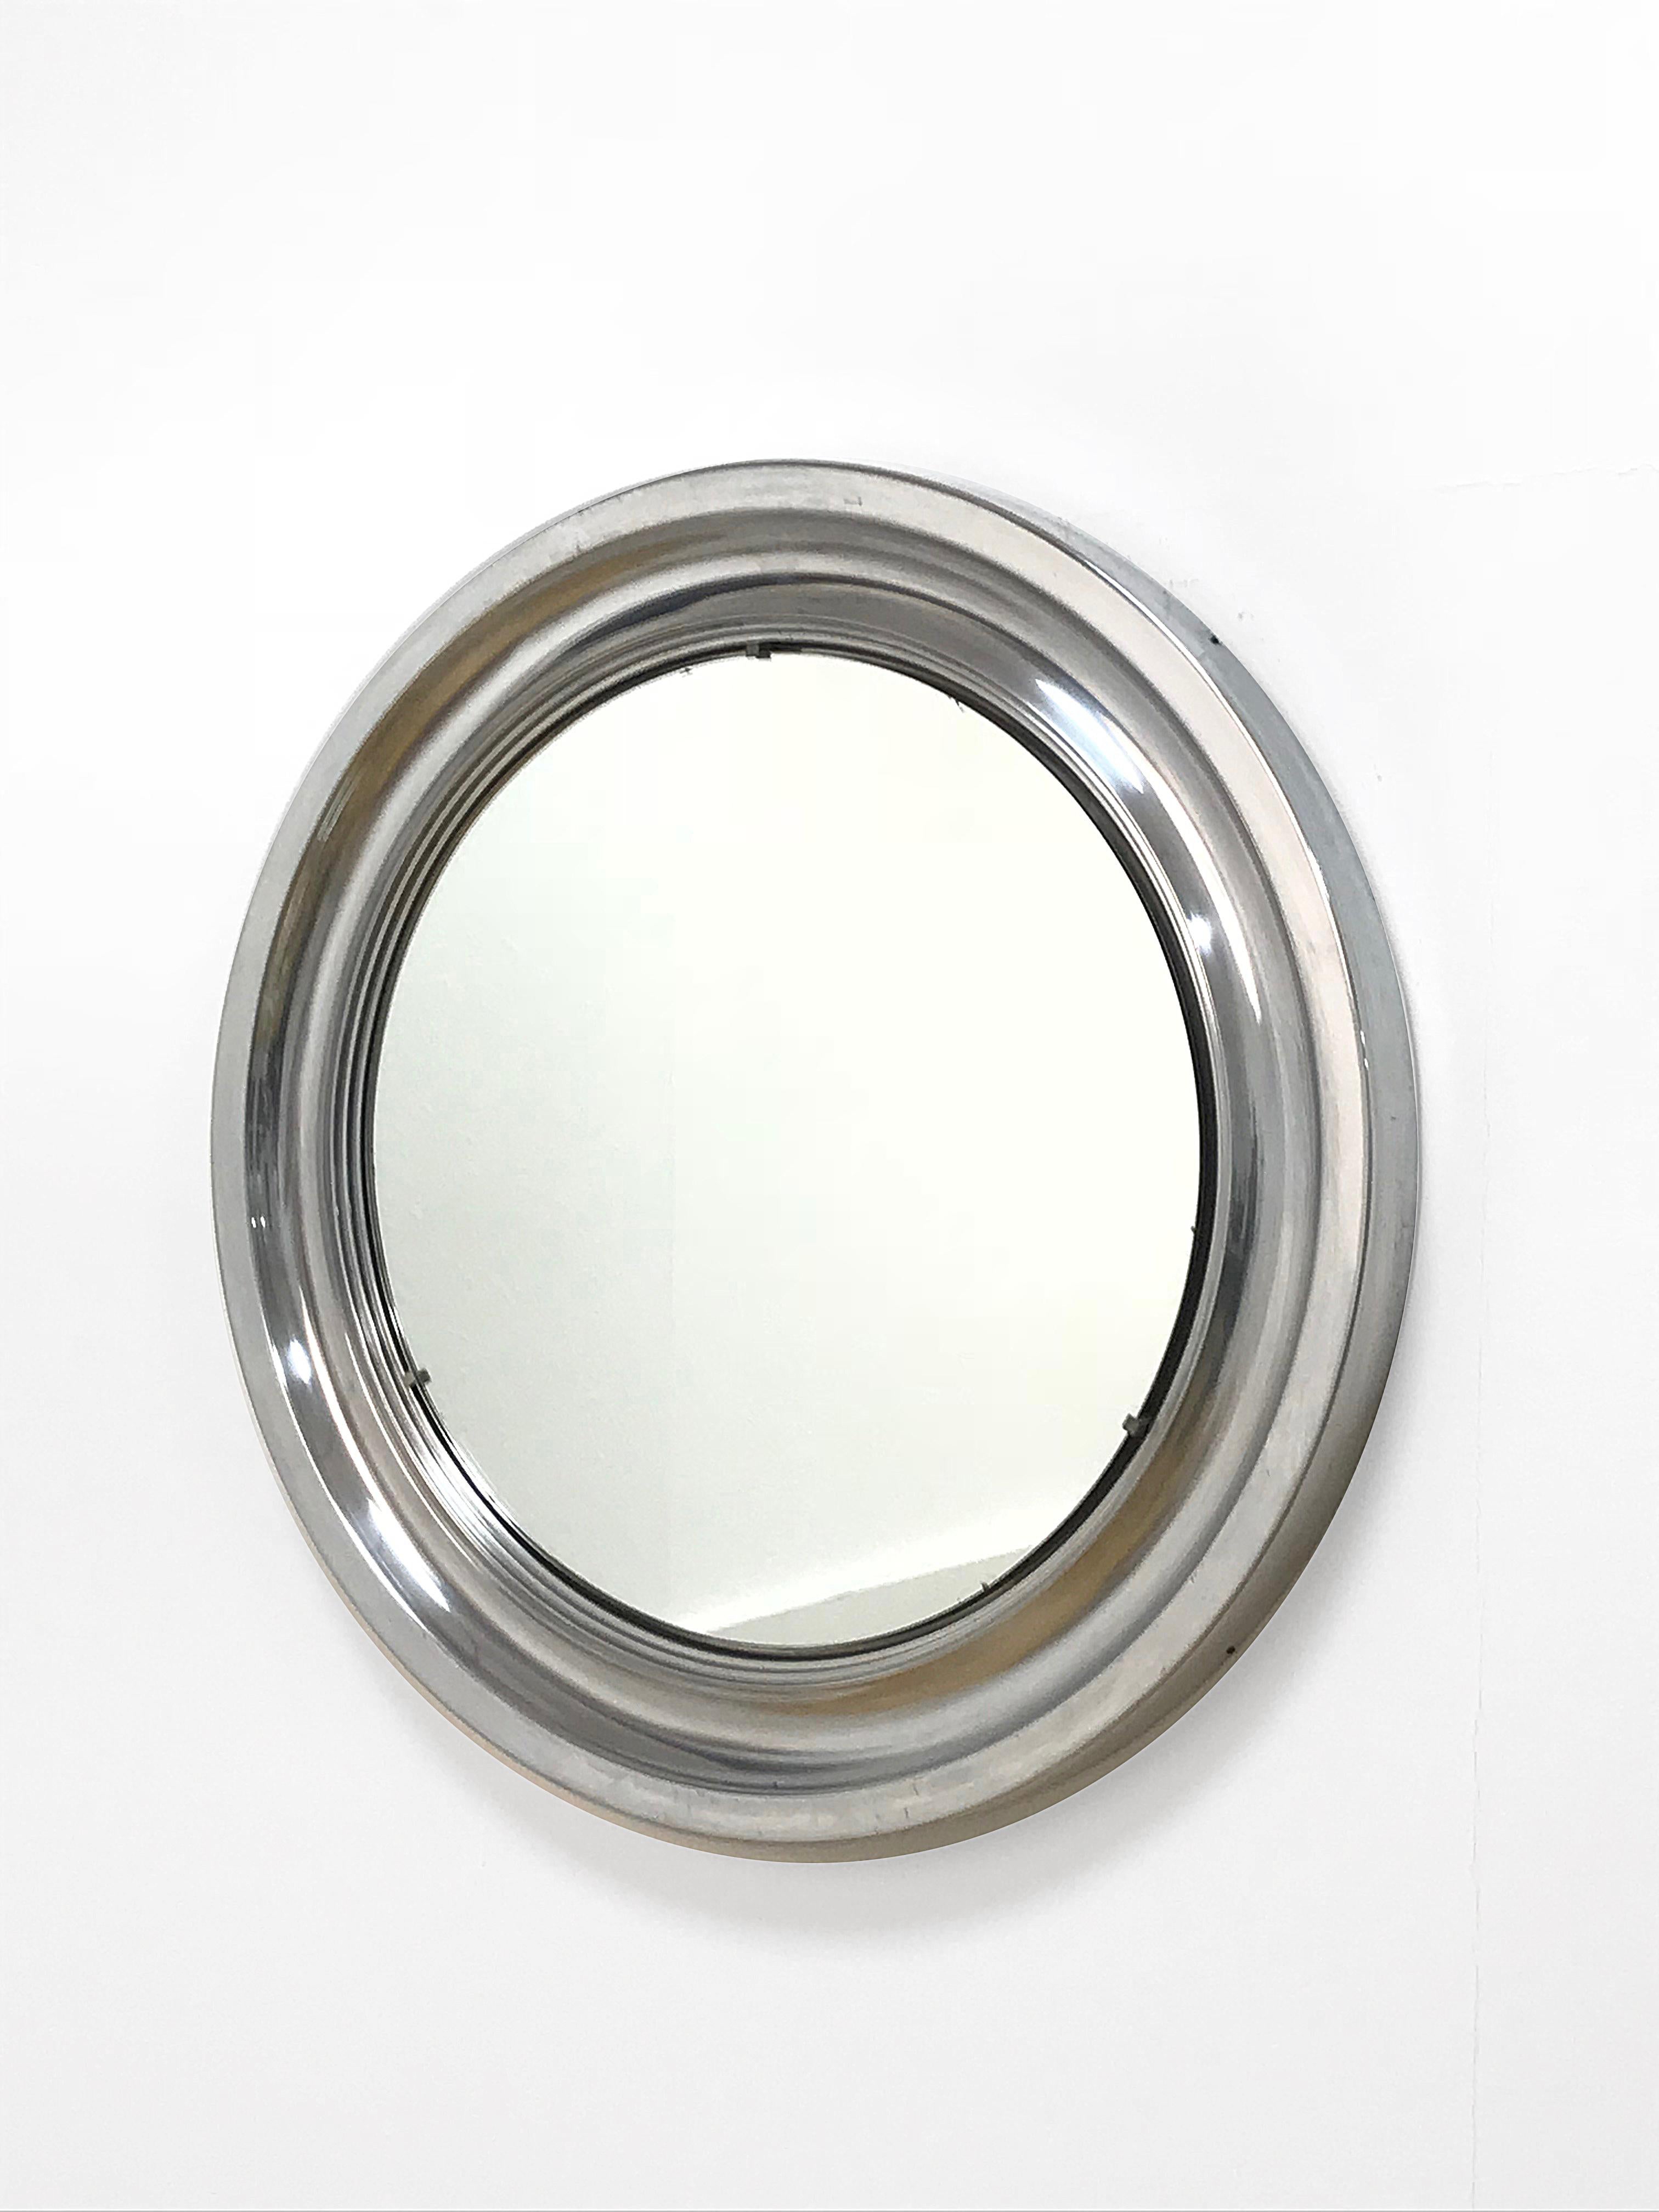 Sergio Mazza Midcentury Aluminum Italian Round Mirror in Artemide Style, 1960s In Good Condition For Sale In Roma, IT